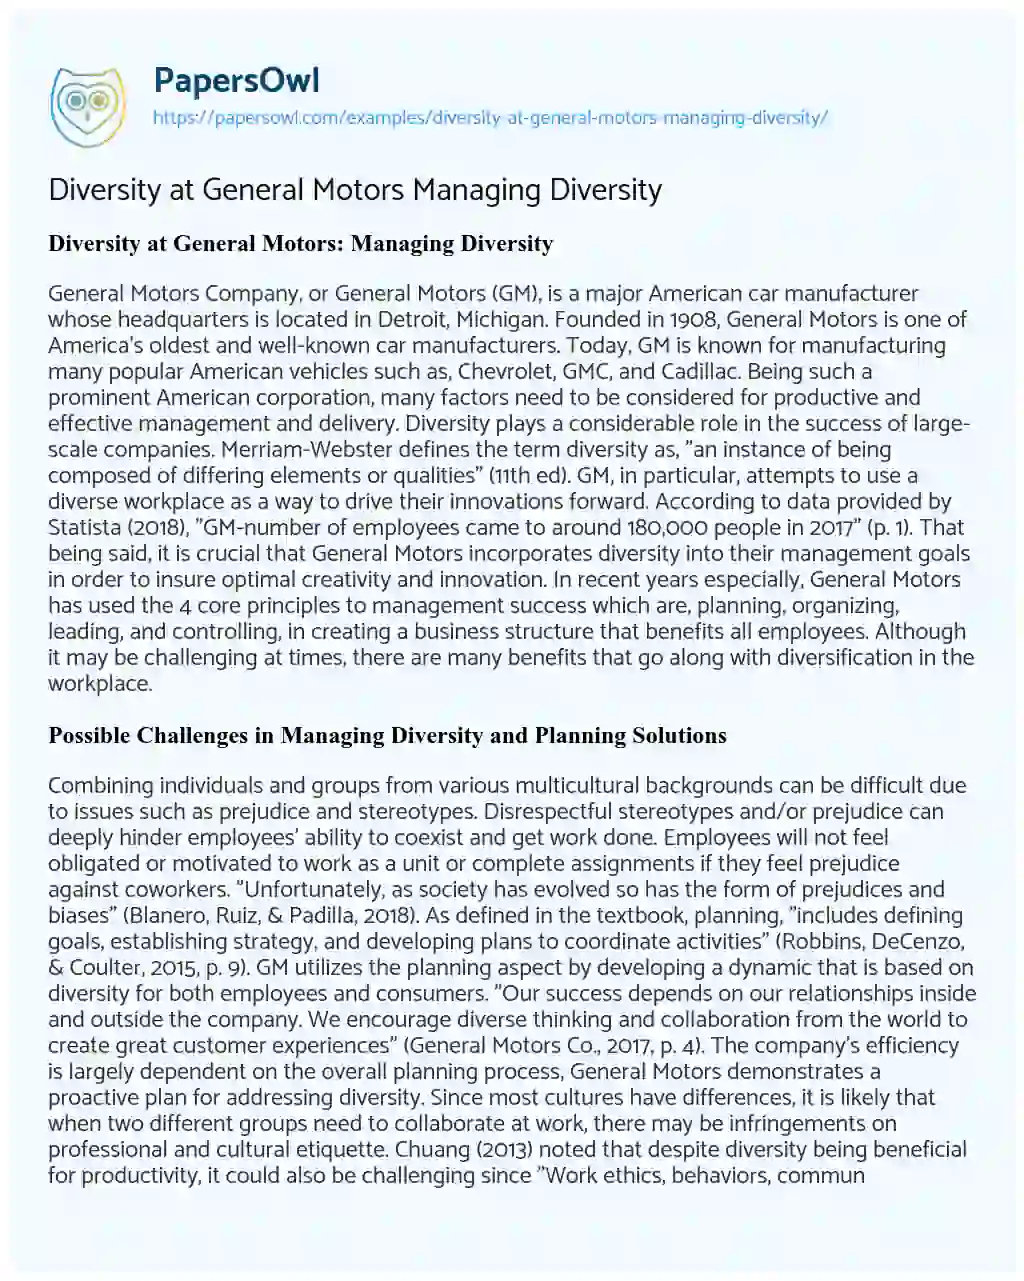 Essay on Diversity at General Motors Managing Diversity